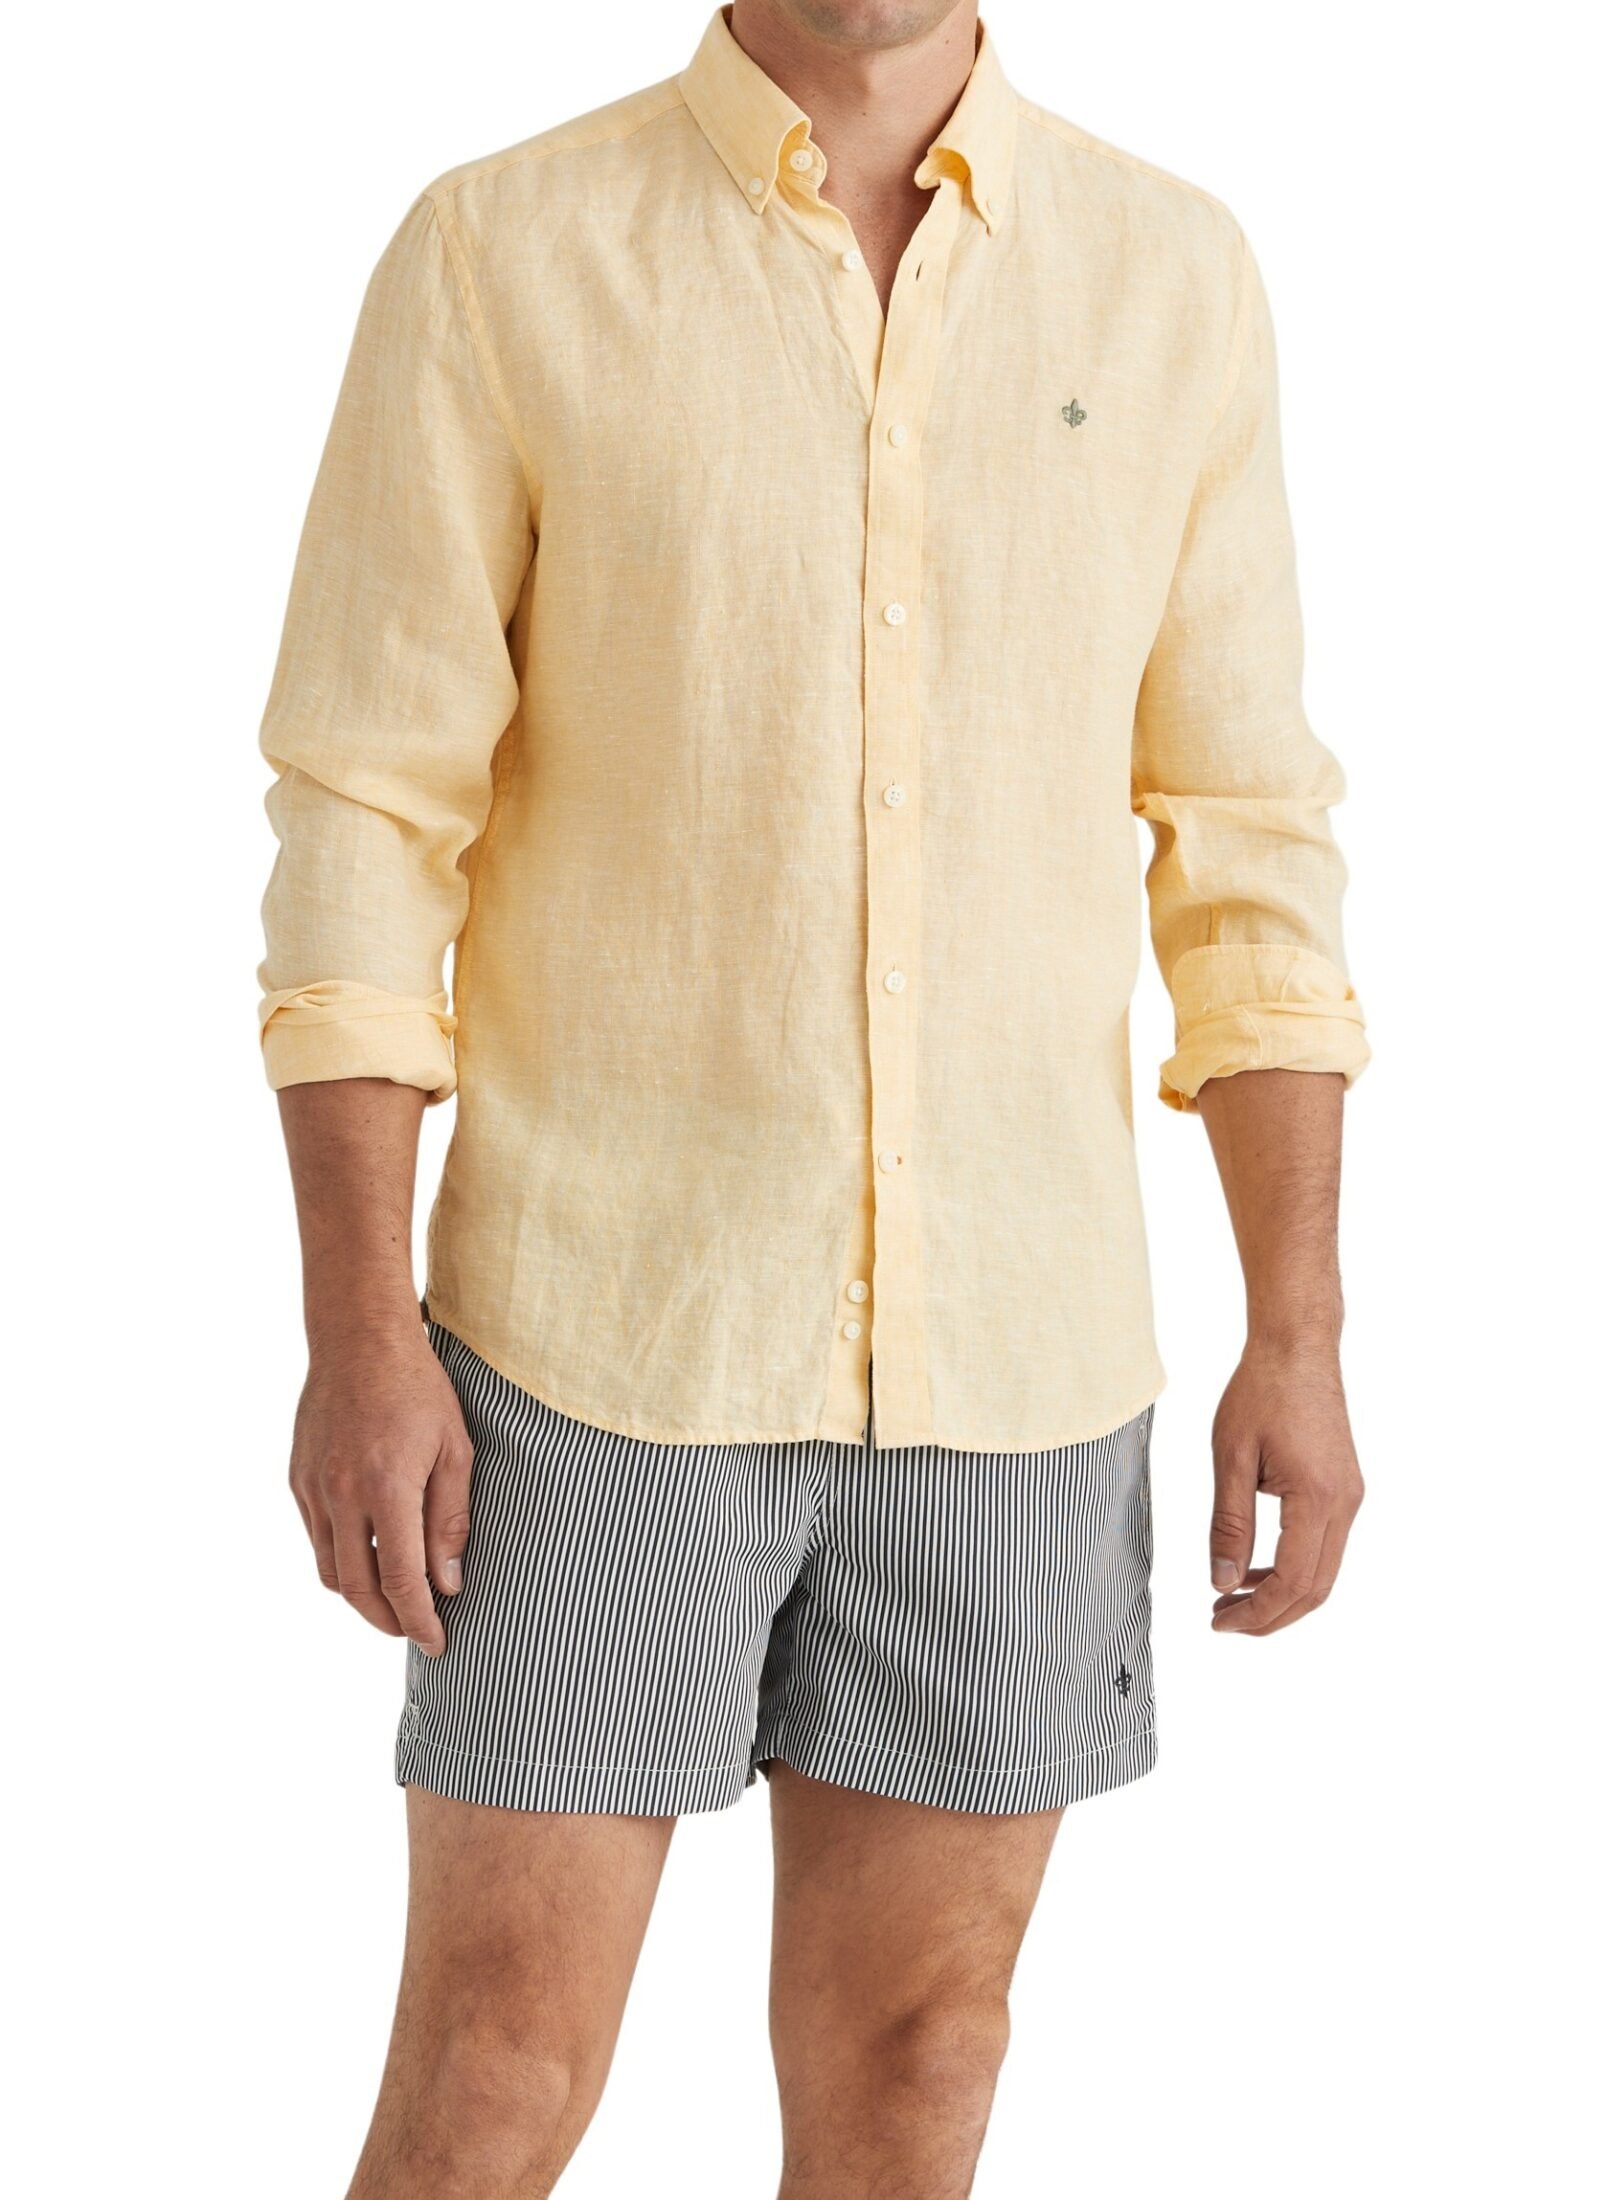 801673-douglas-linen-shirt-classic-fit-11-yellow-1